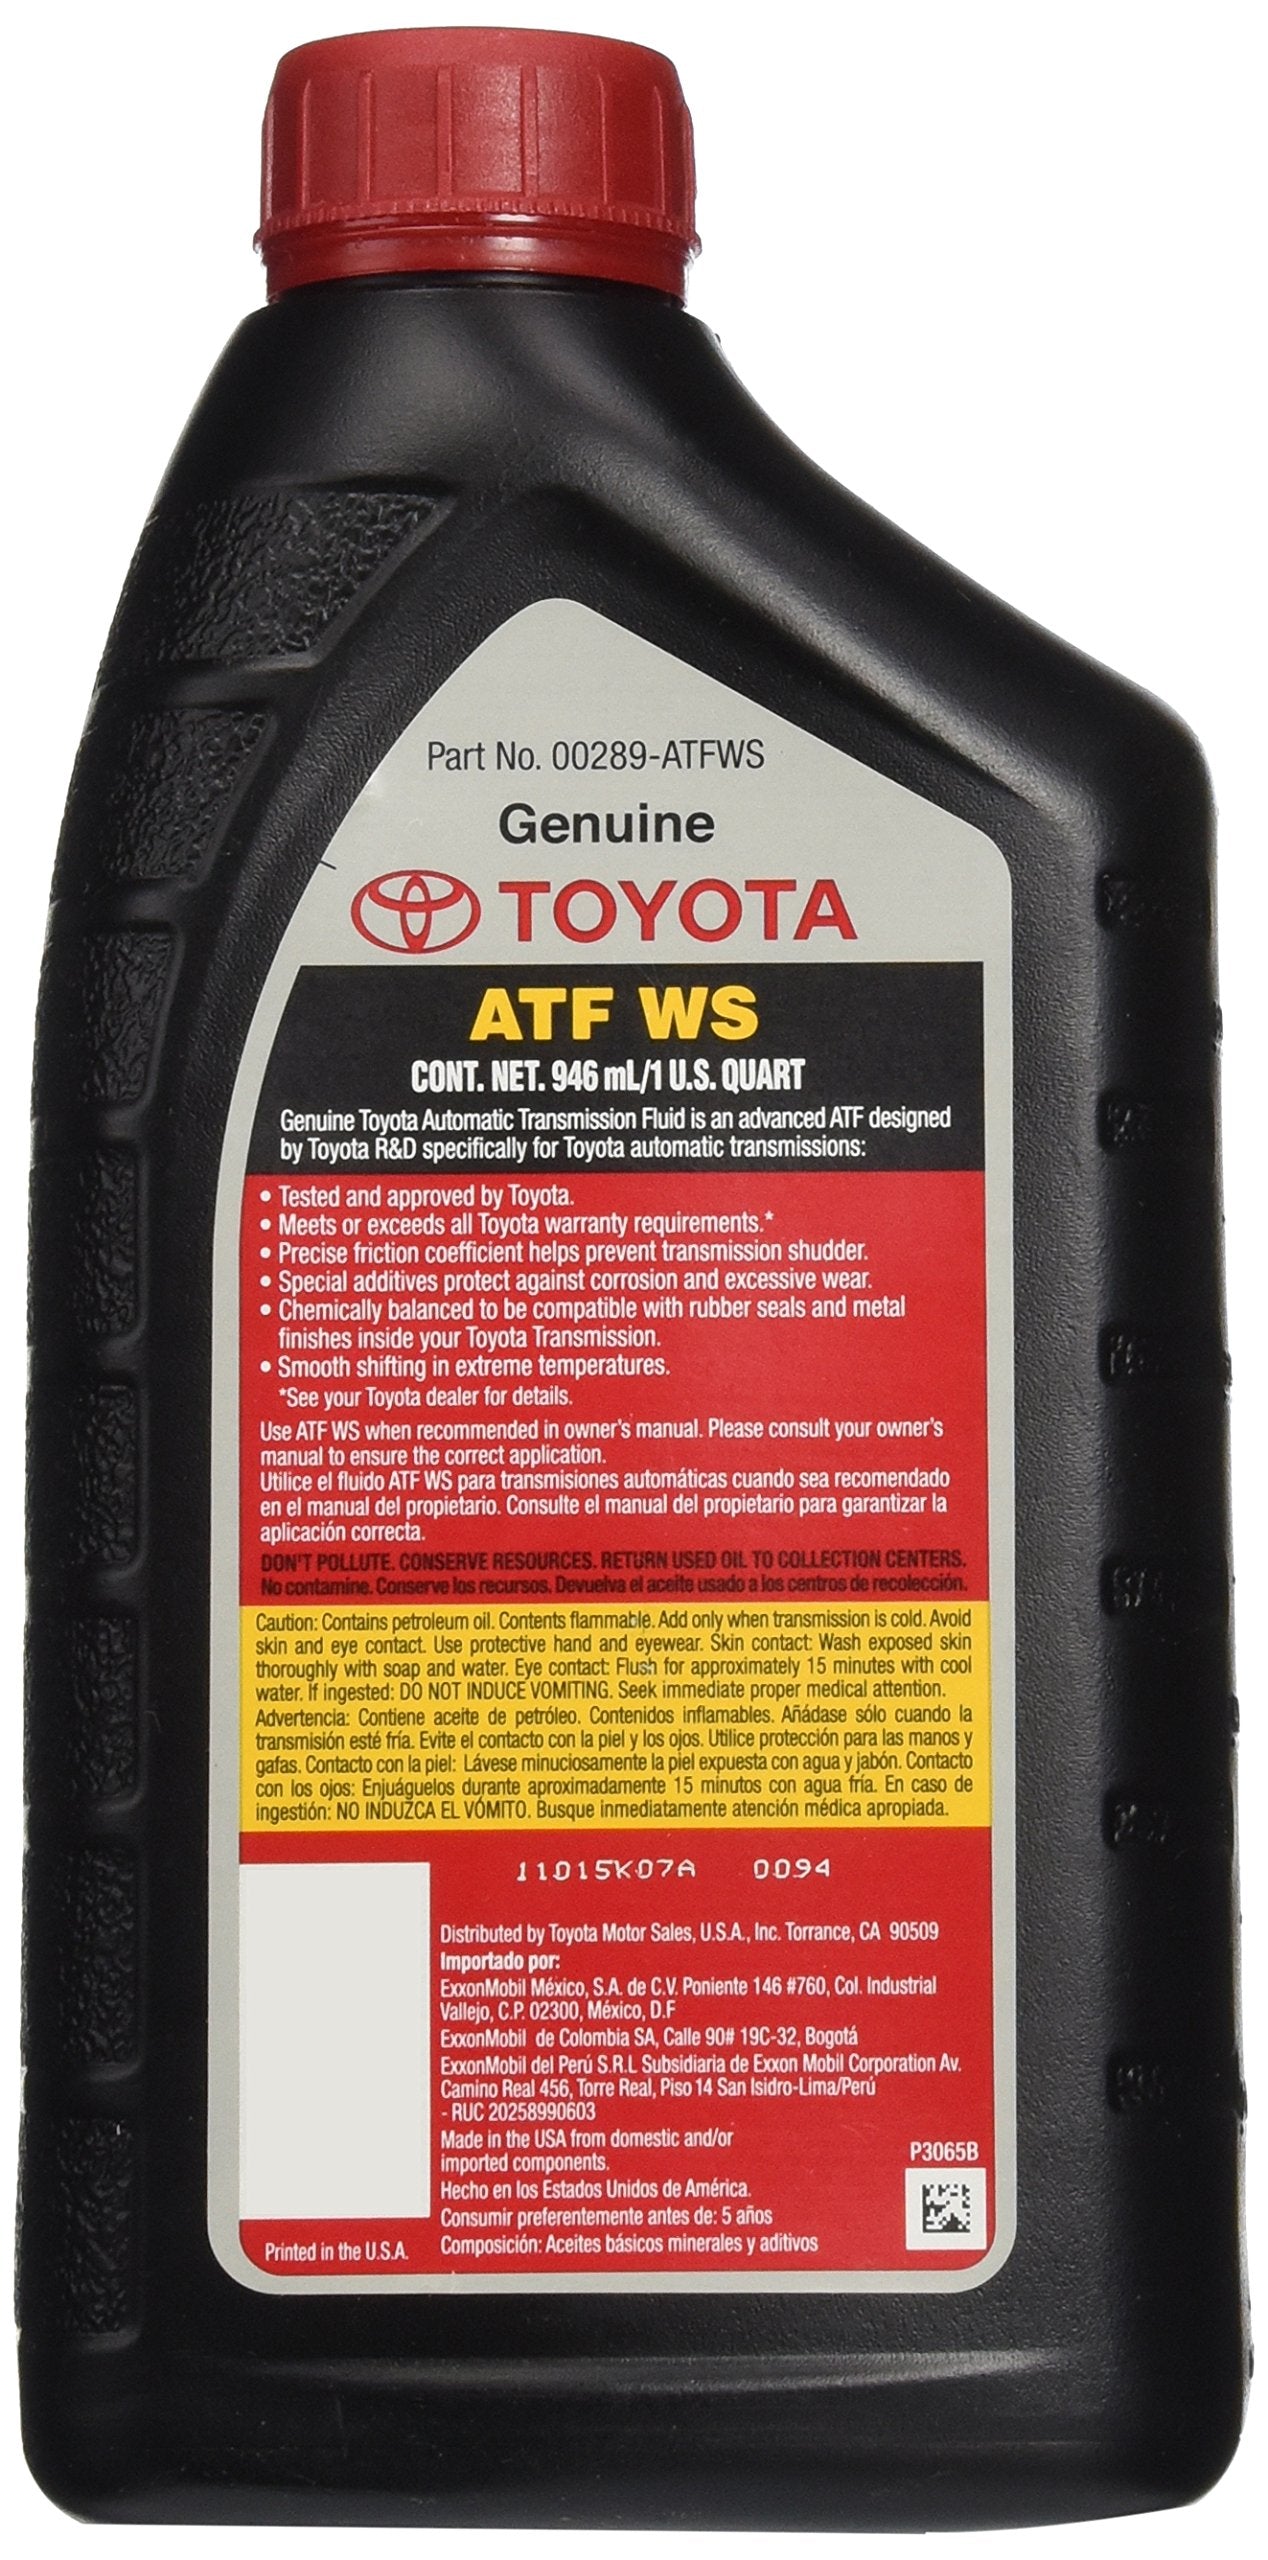 Toyota 00289-ATFWS Lexus & Automatic Transmission Fluid WS ATF World Standard, Pack of 4